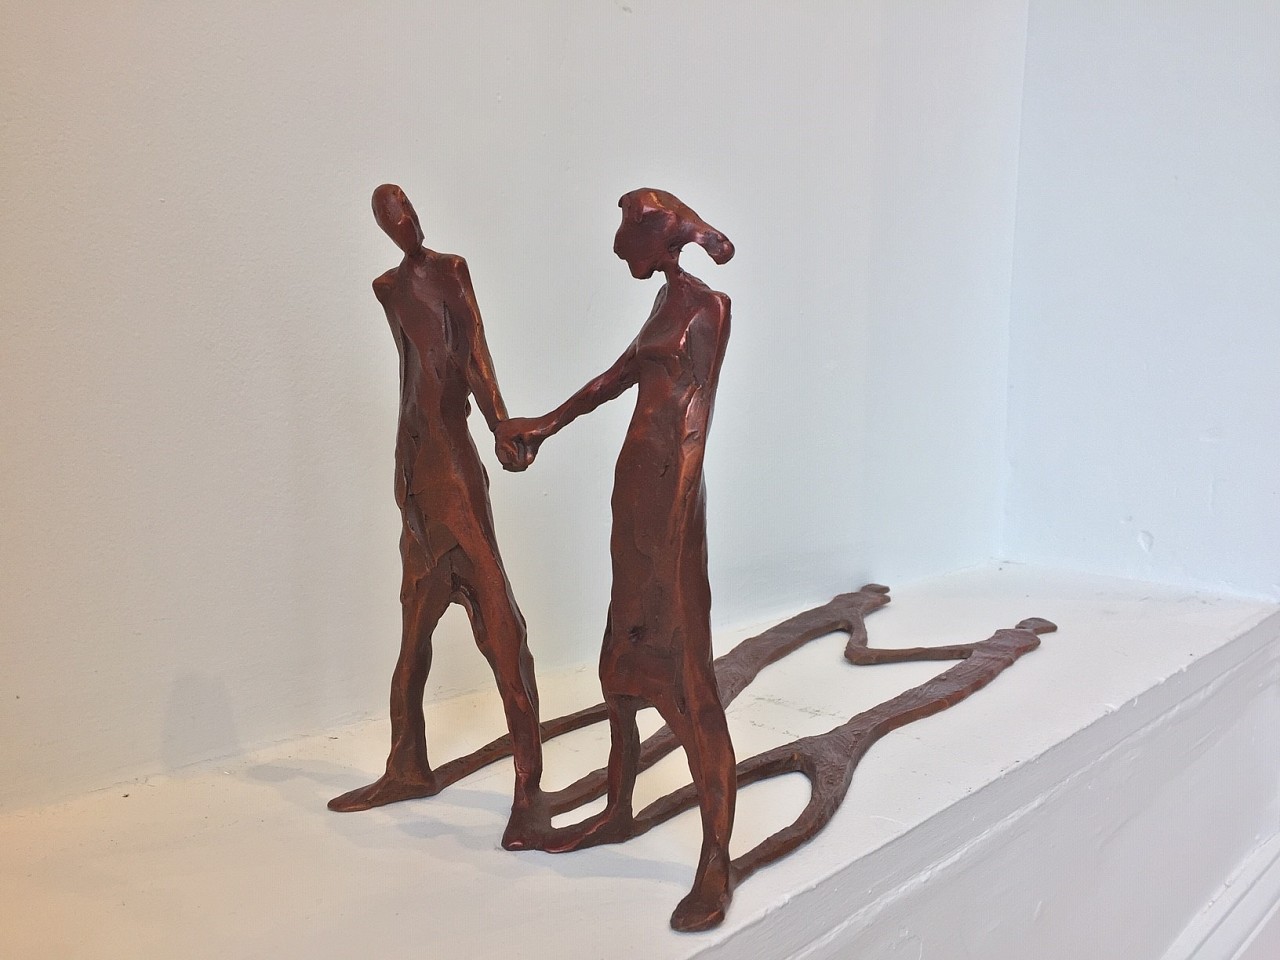 Jane DeDecker, Love Grows (S), Ed. 6/31, 2018
bronze, 9 x 20 x 6 in. (22.9 x 50.8 x 15.2 cm)
JD181202